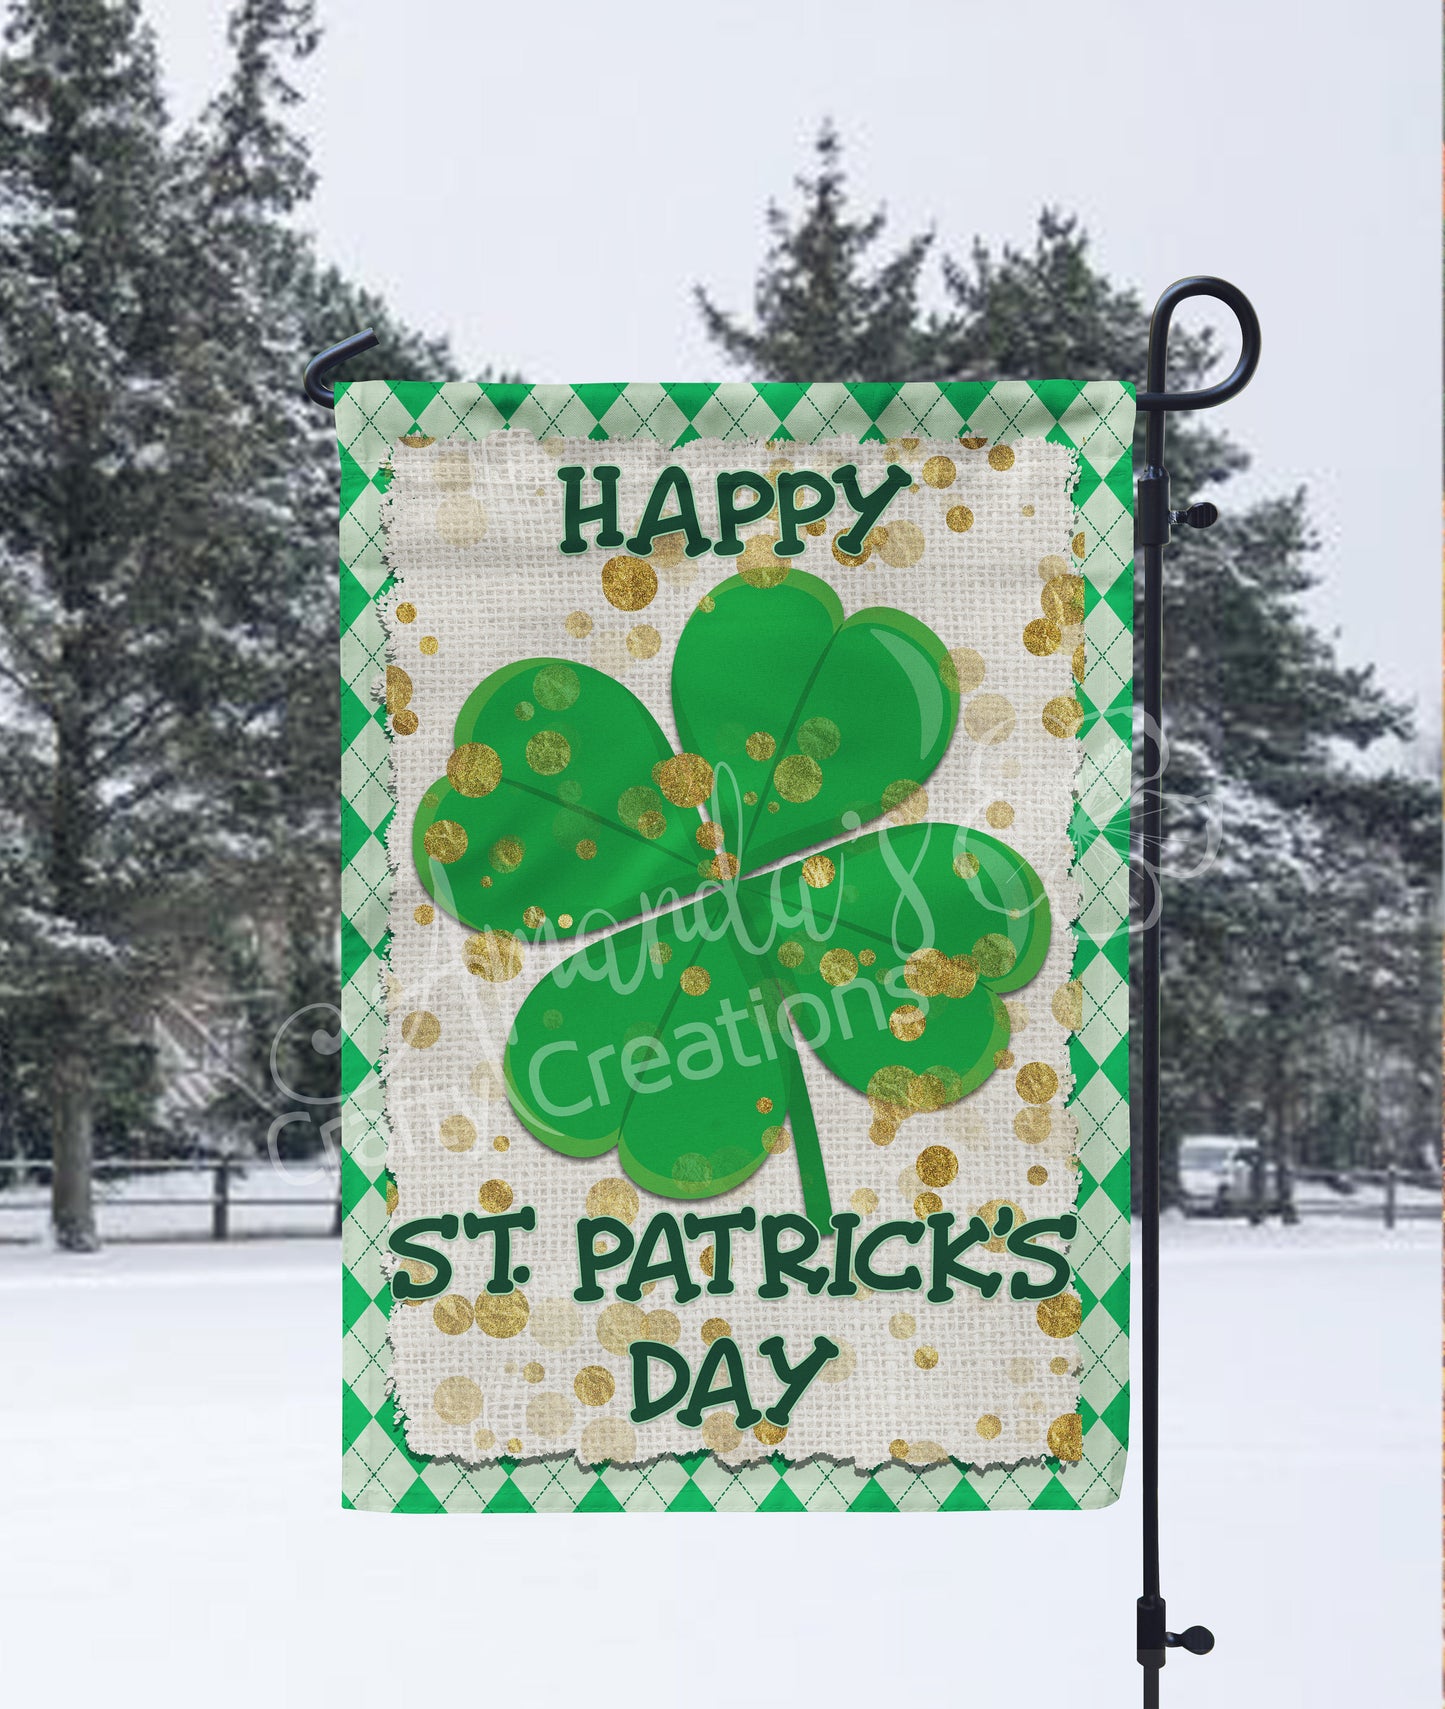 Happy St. Patrick's day garden flag with shamrock